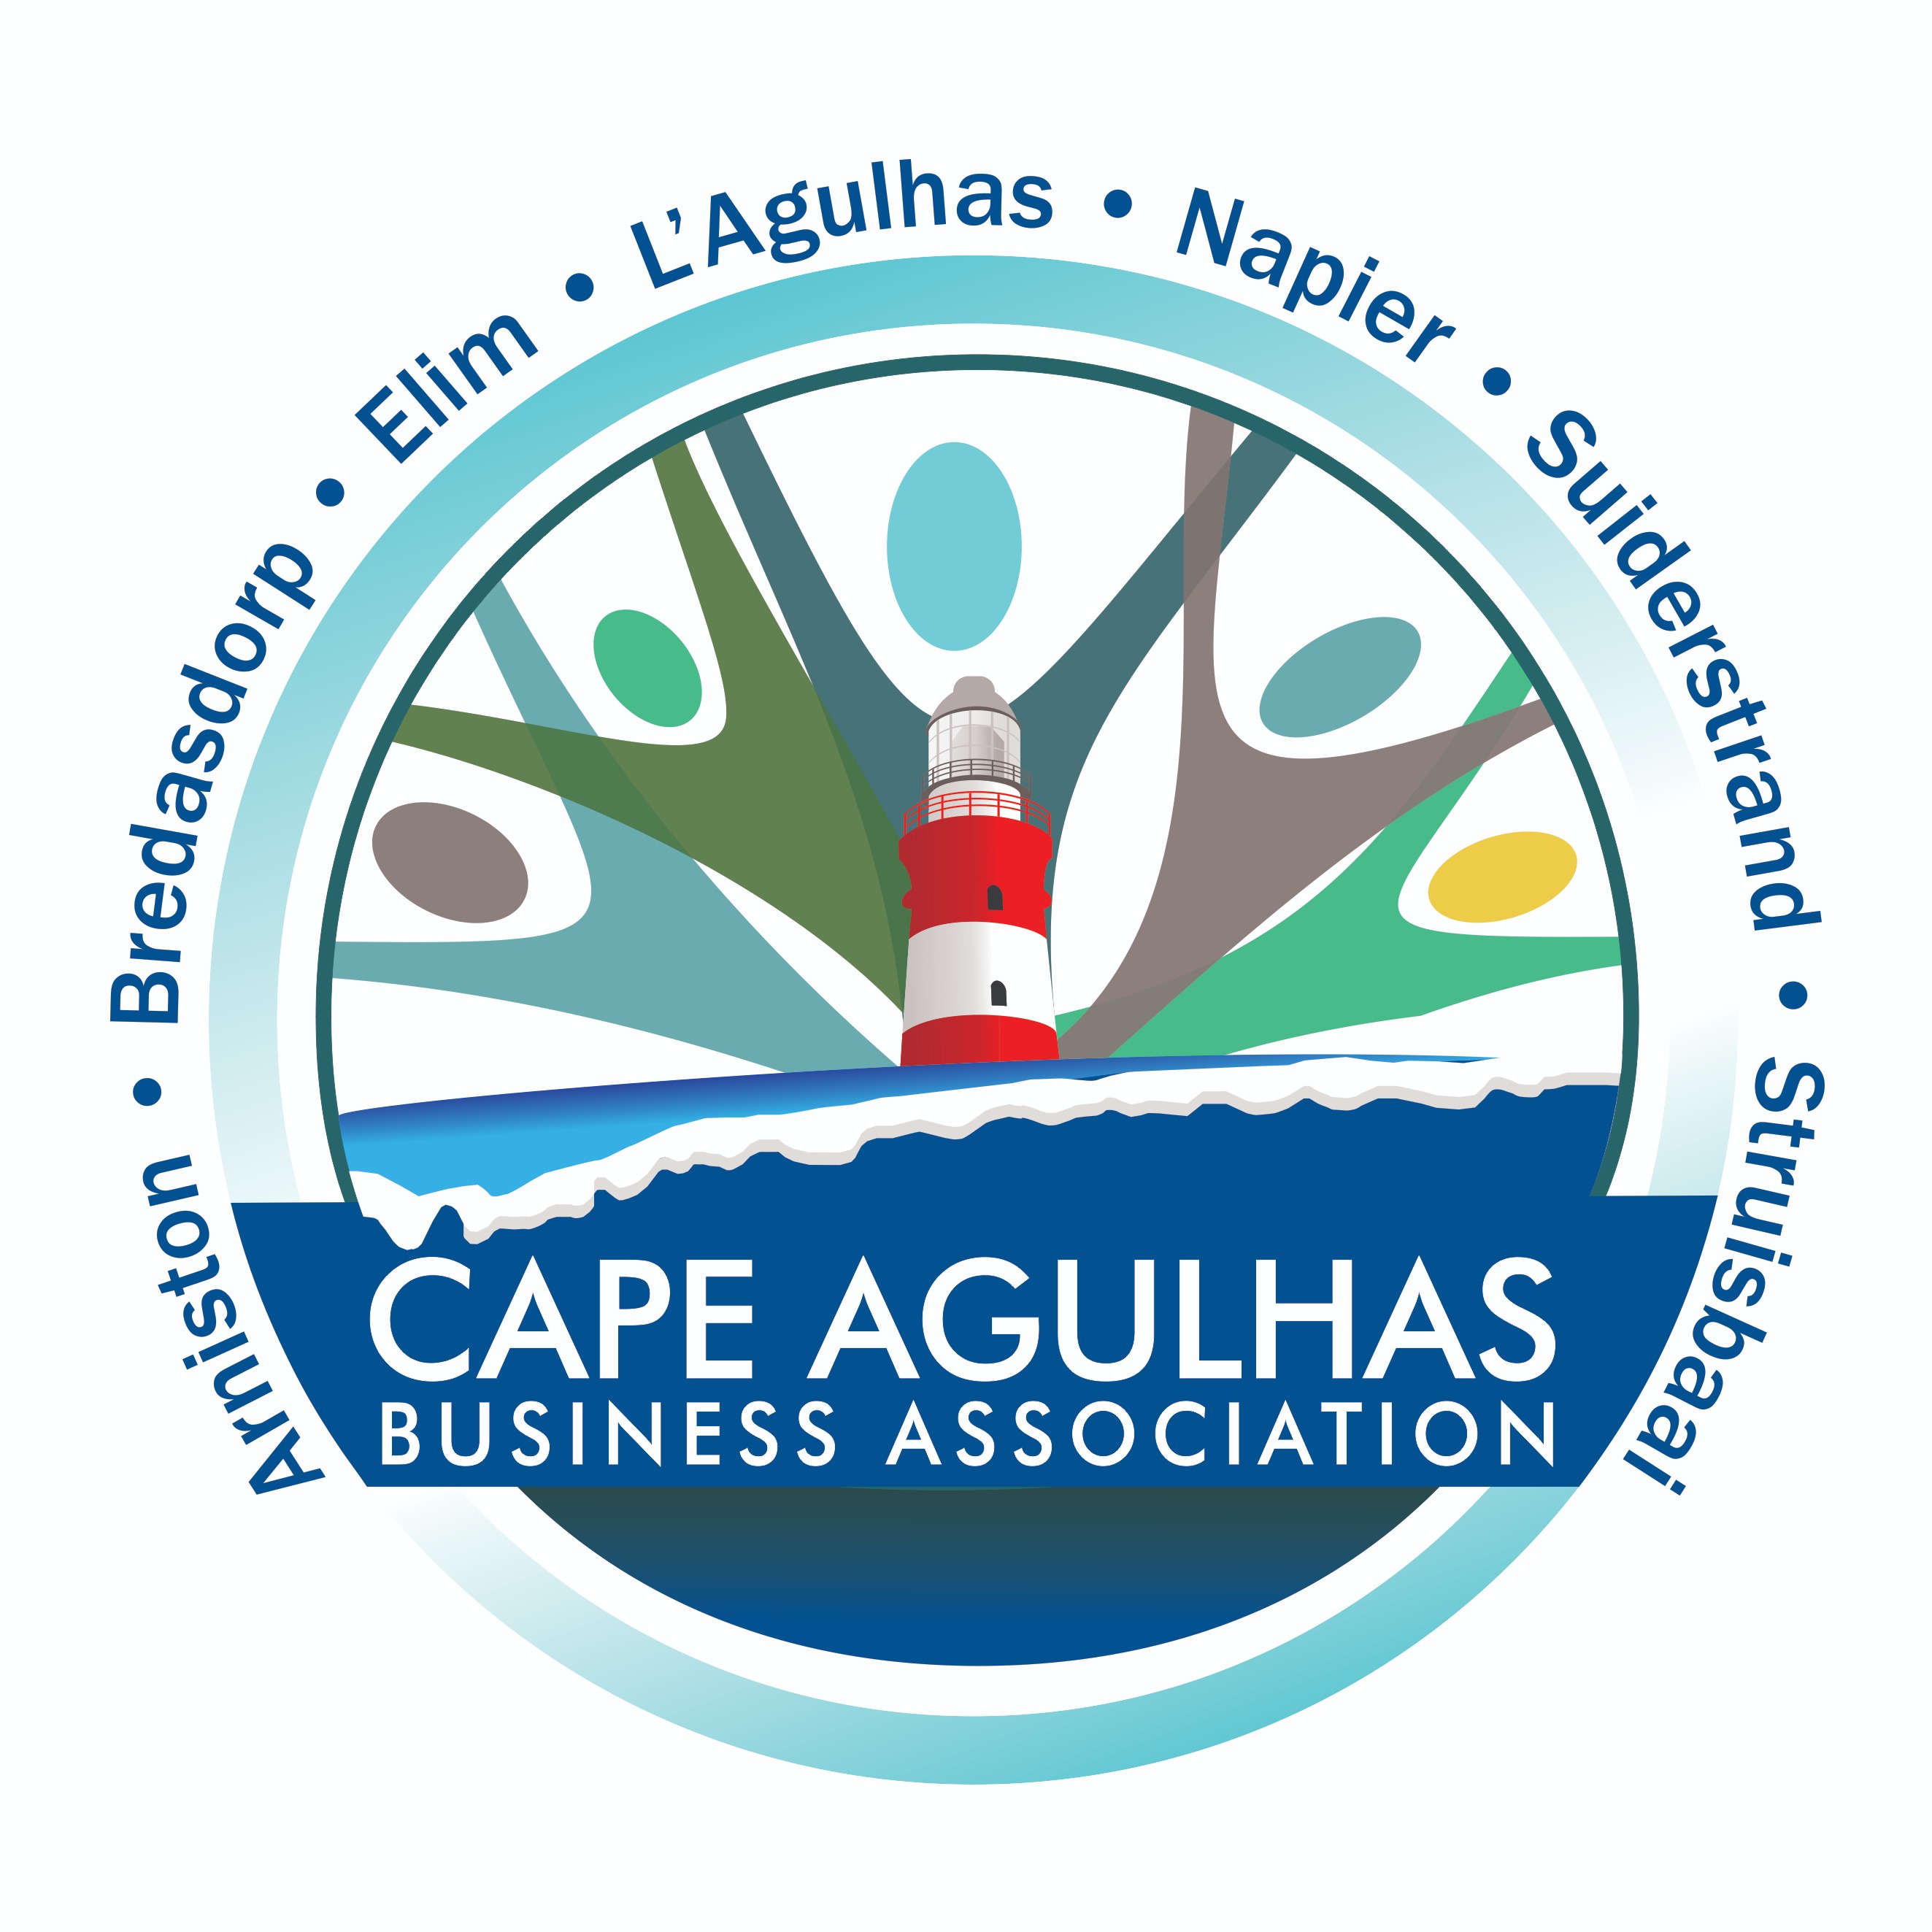 CABA (Cape Agulhas Business Association)